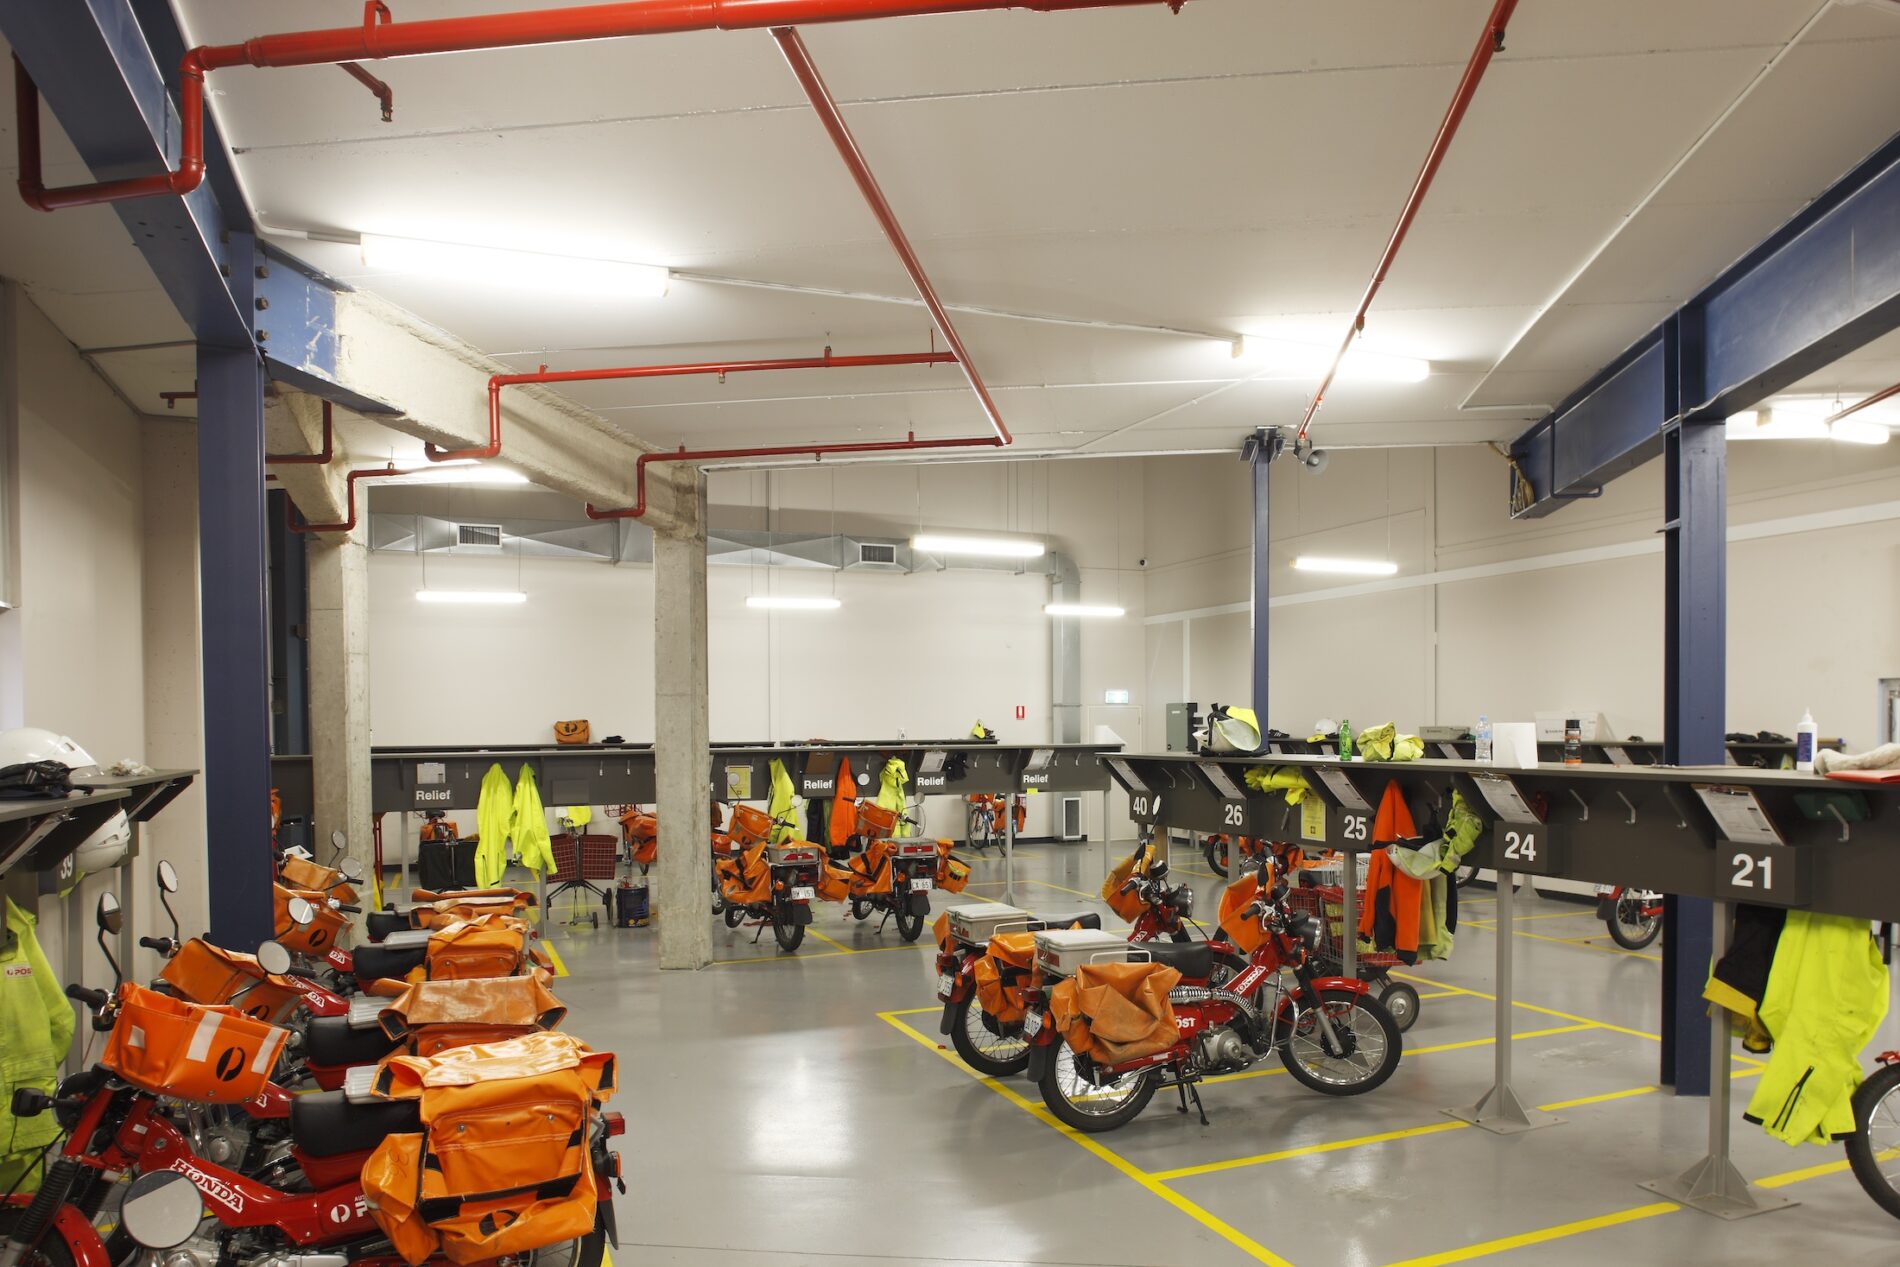 Australia Post motorbike fleet parking bays in warehouse